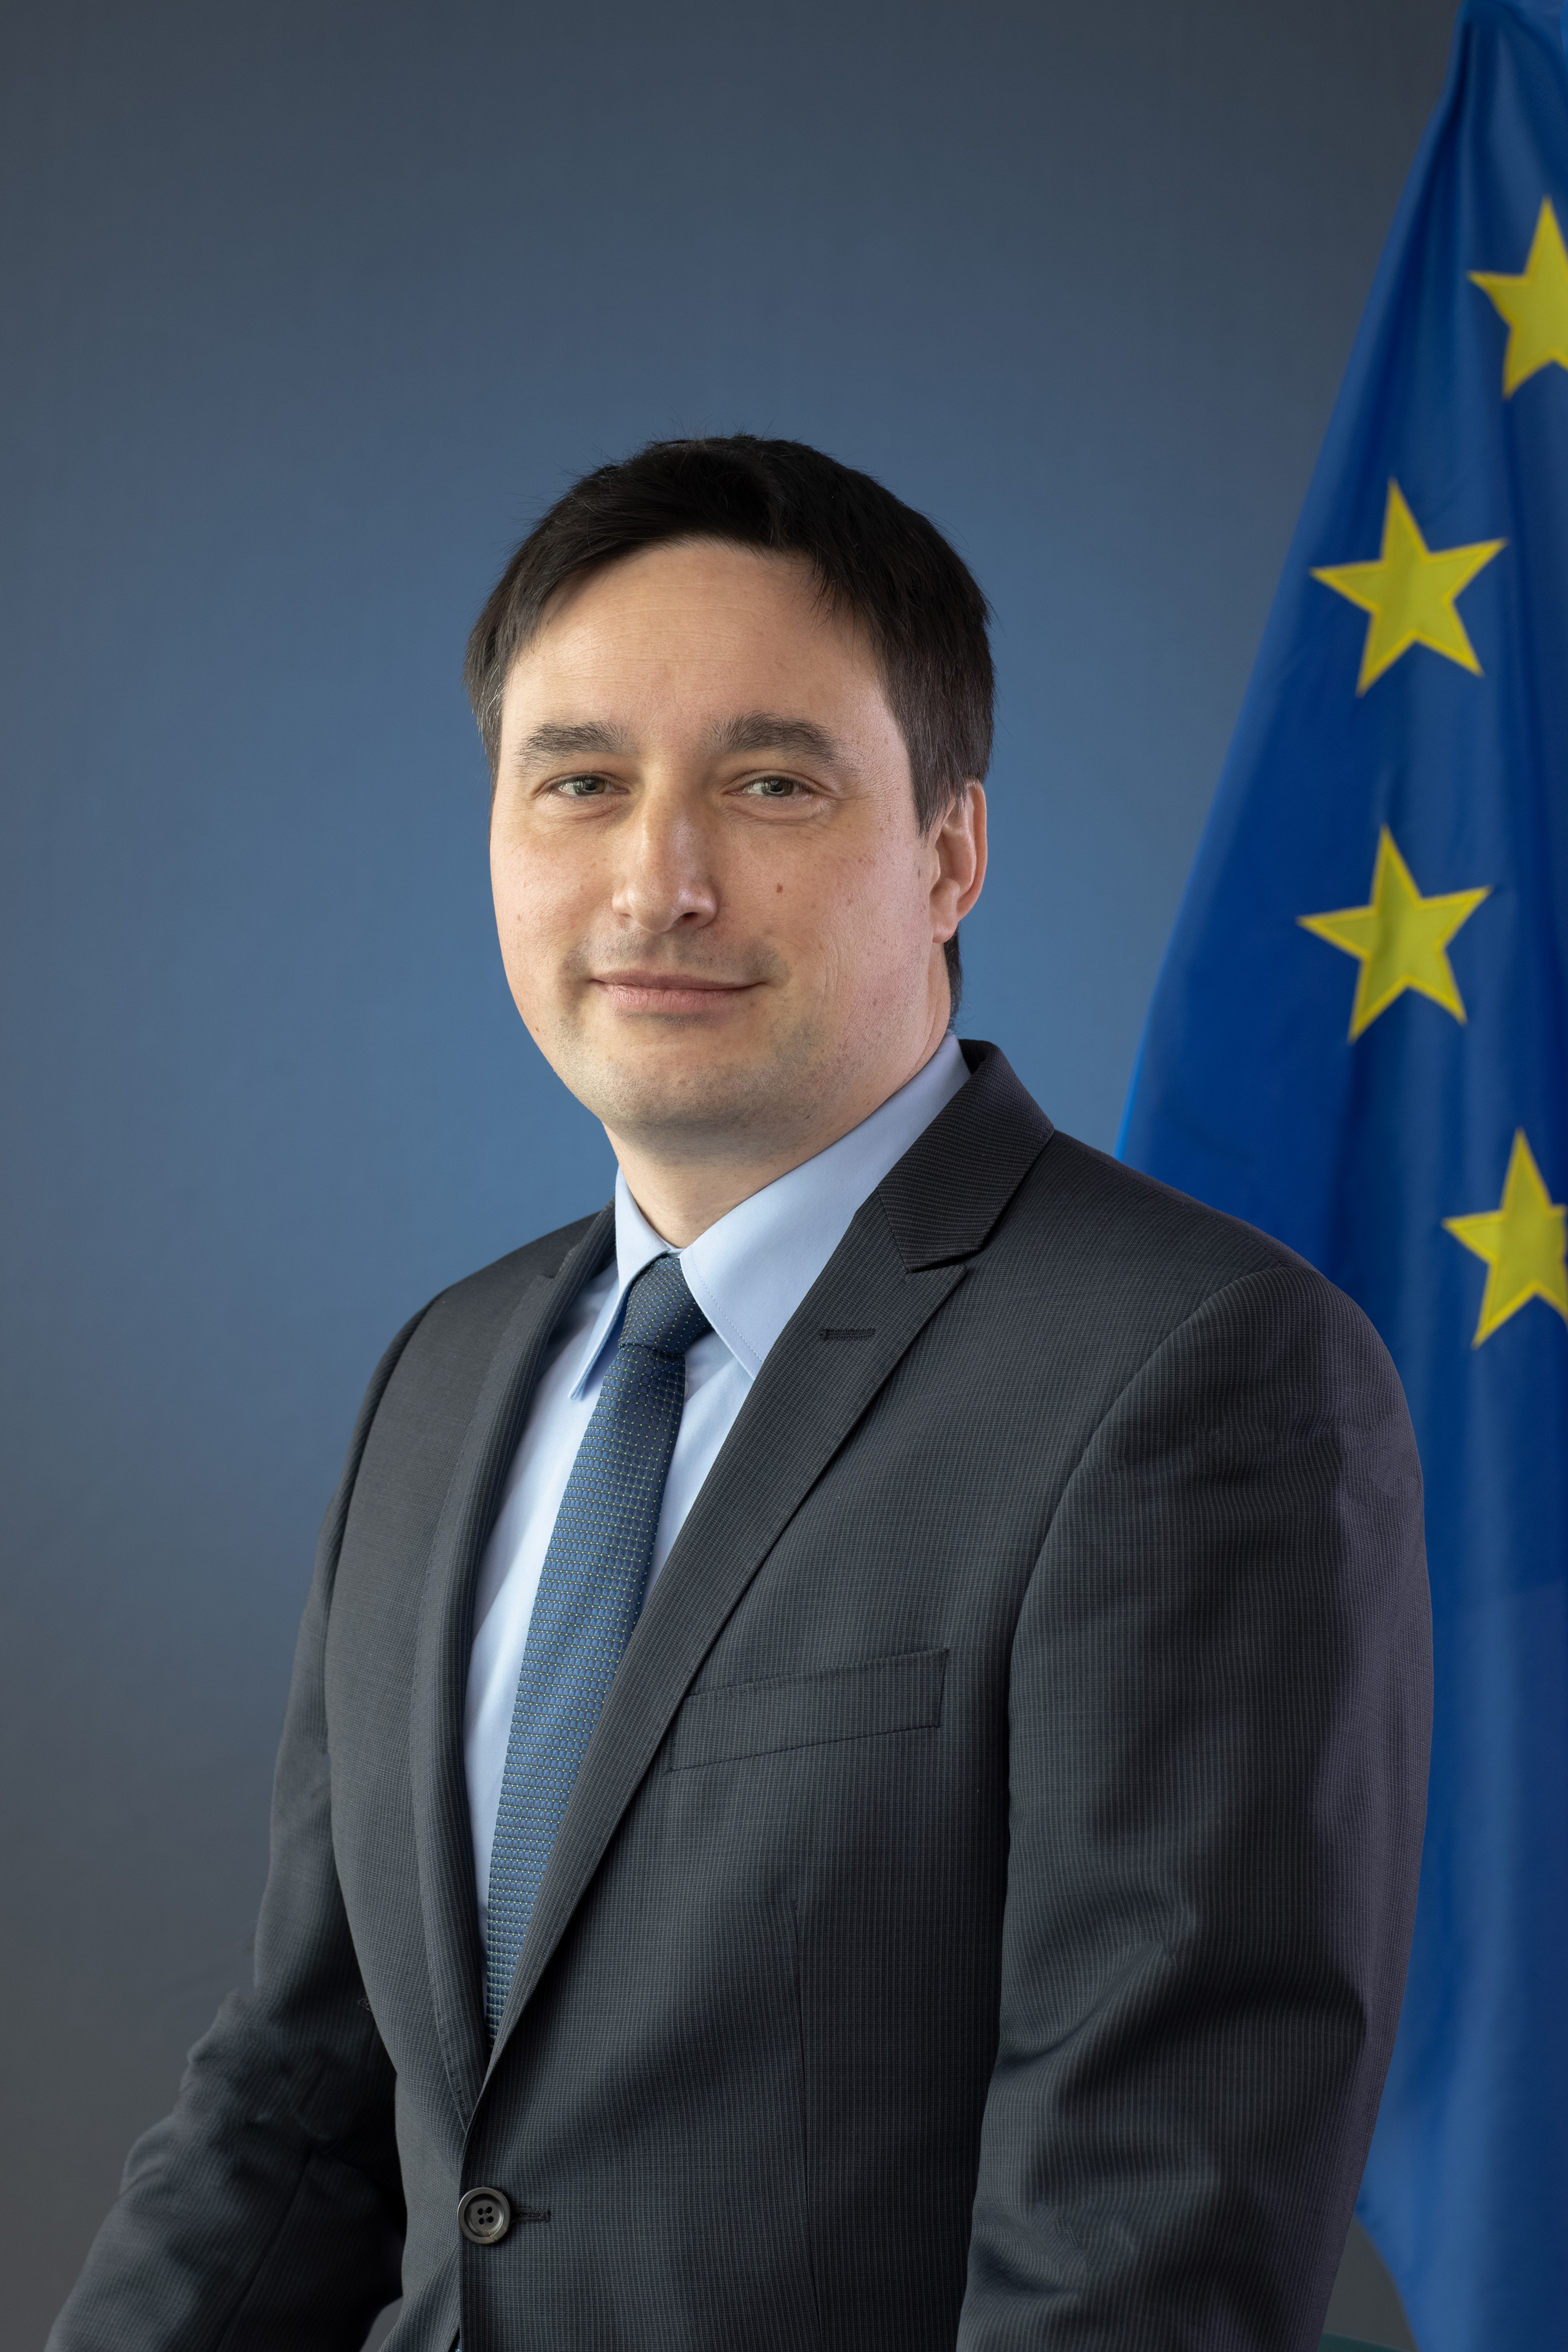 Photograph of European Prosecutor for Slovenia Jaka Brezigar